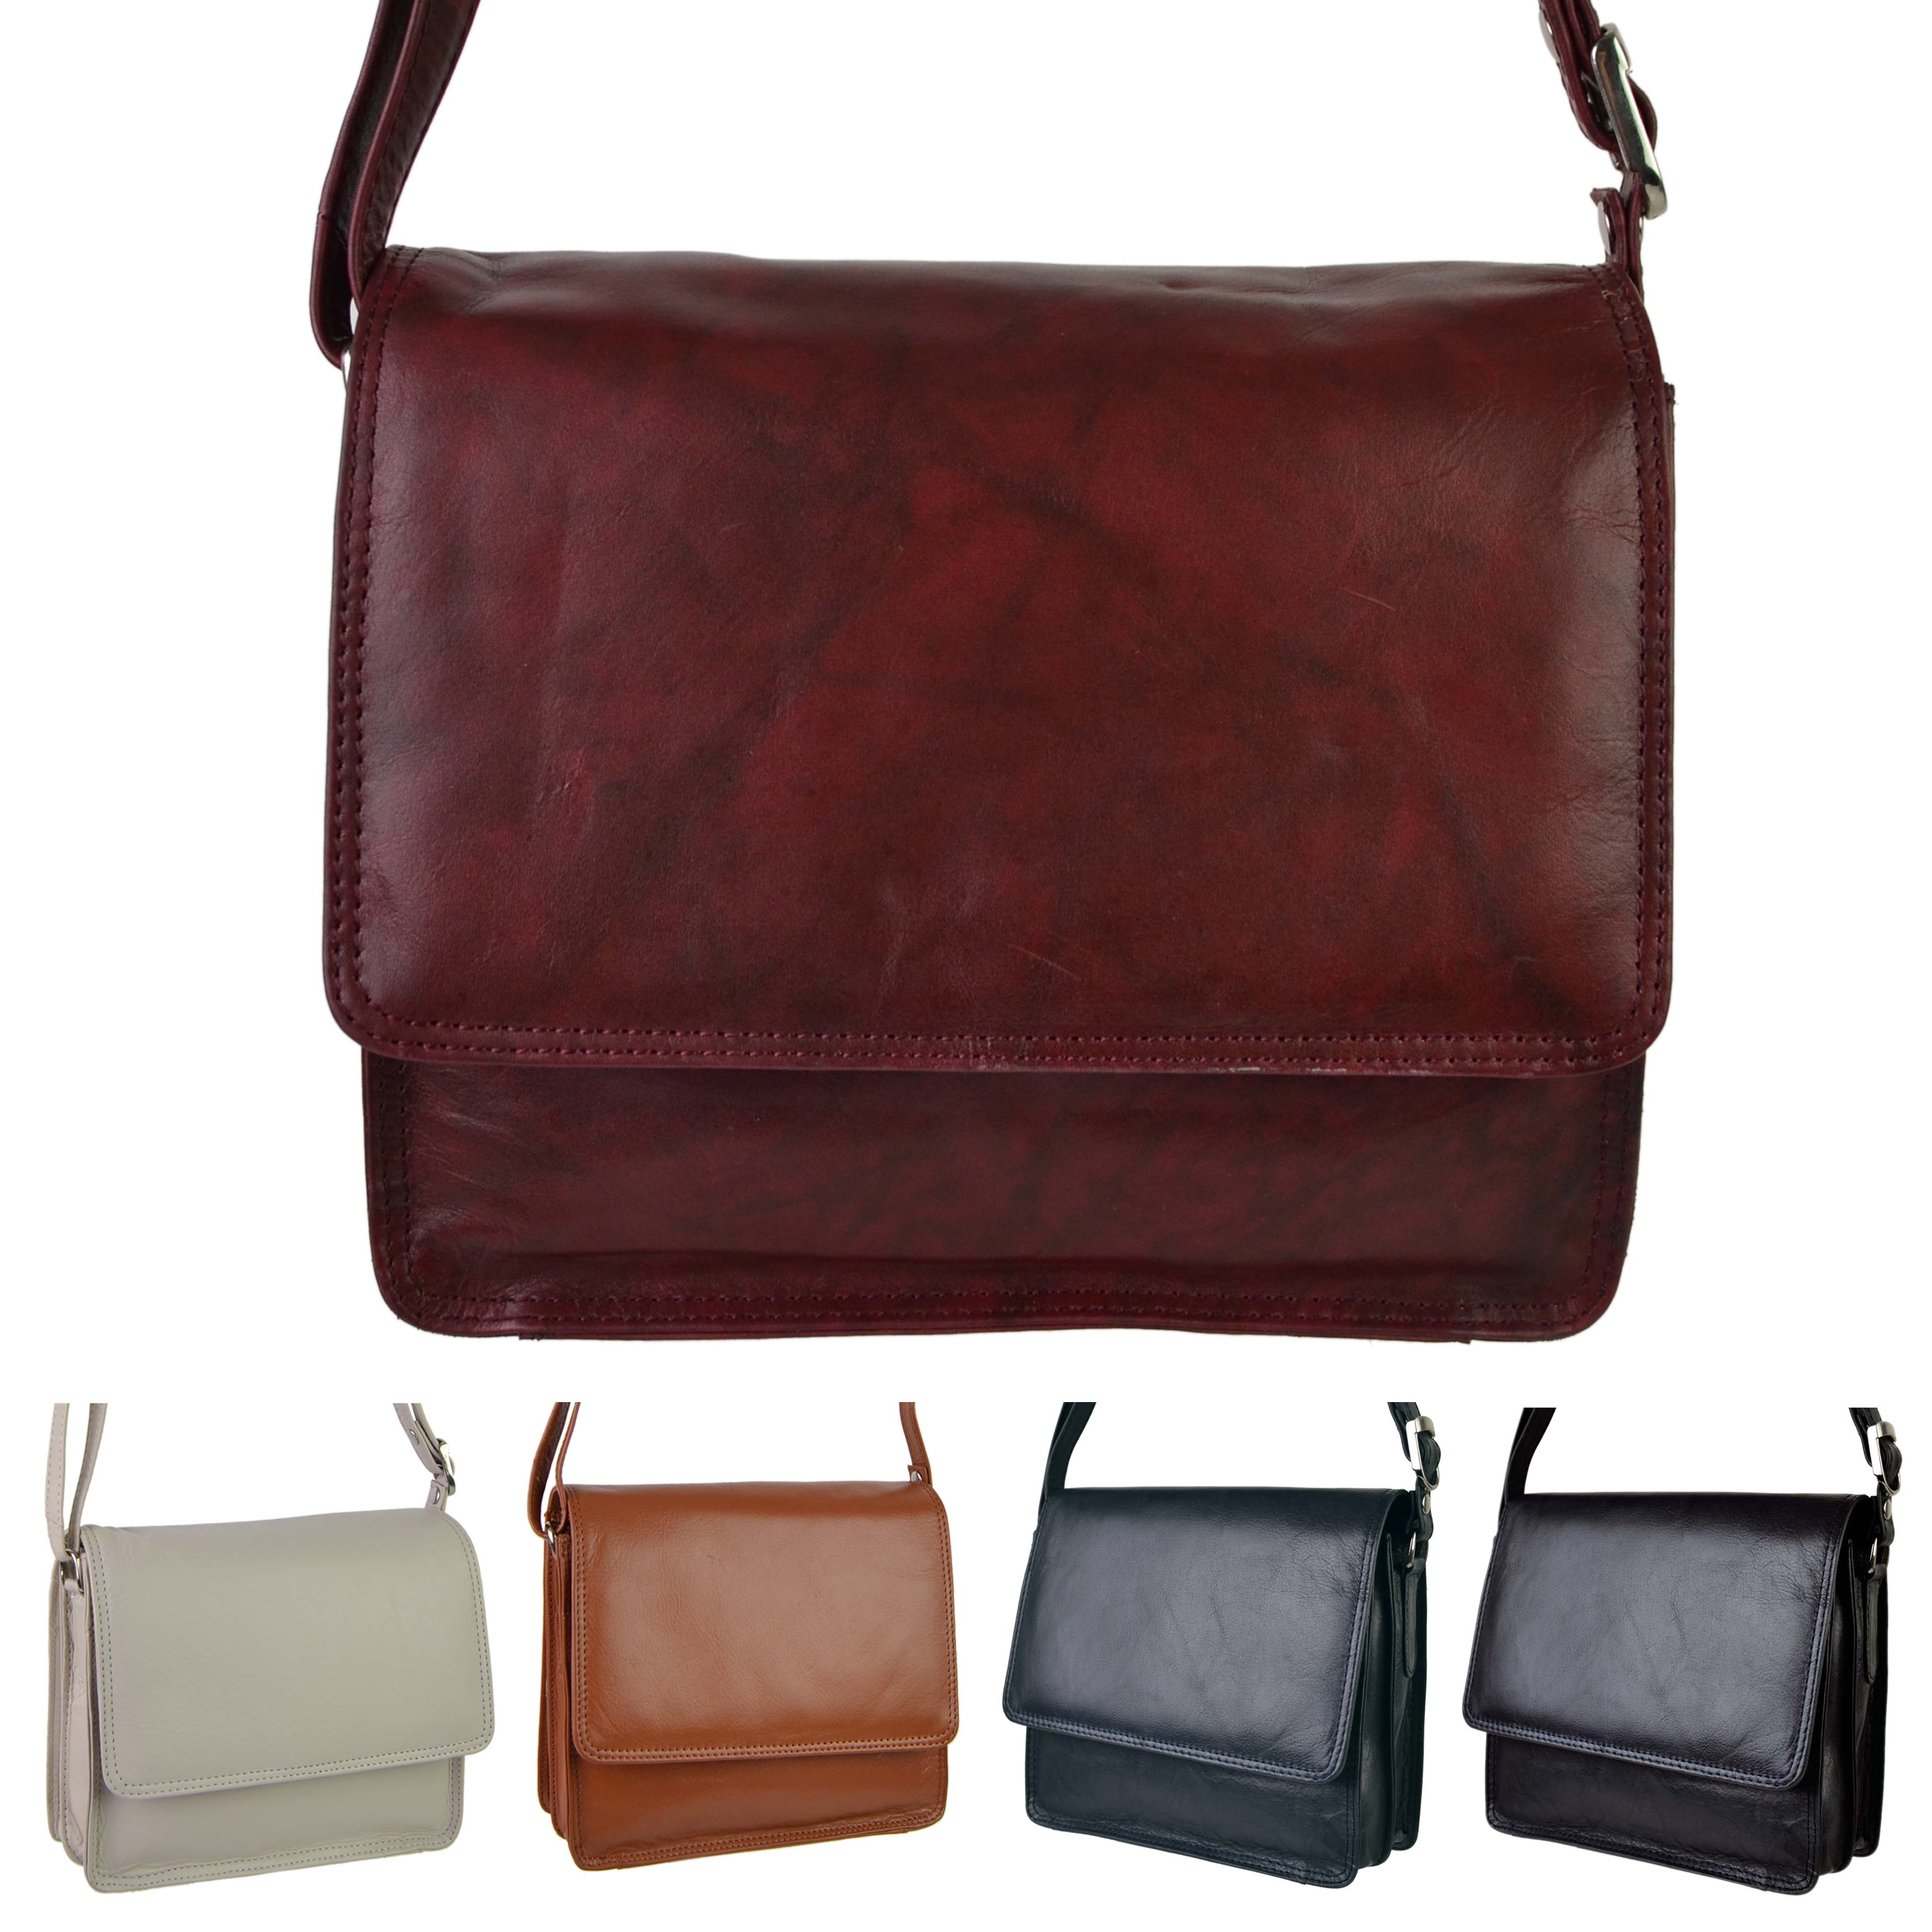 Women's Bags & Handbags for sale | eBay